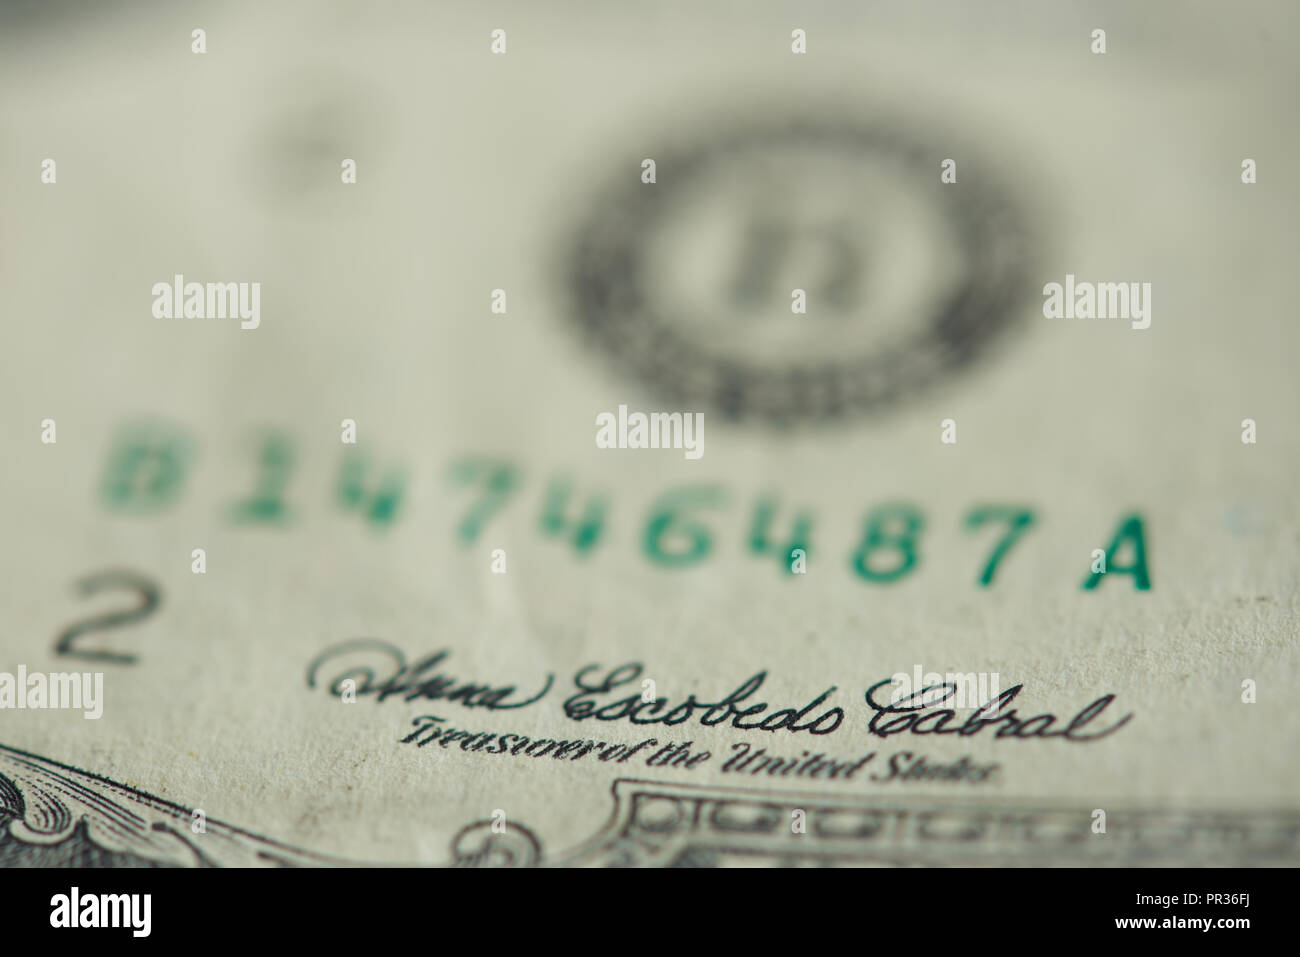 Signature of treasurer on dollar banknote macro close up view Stock Photo